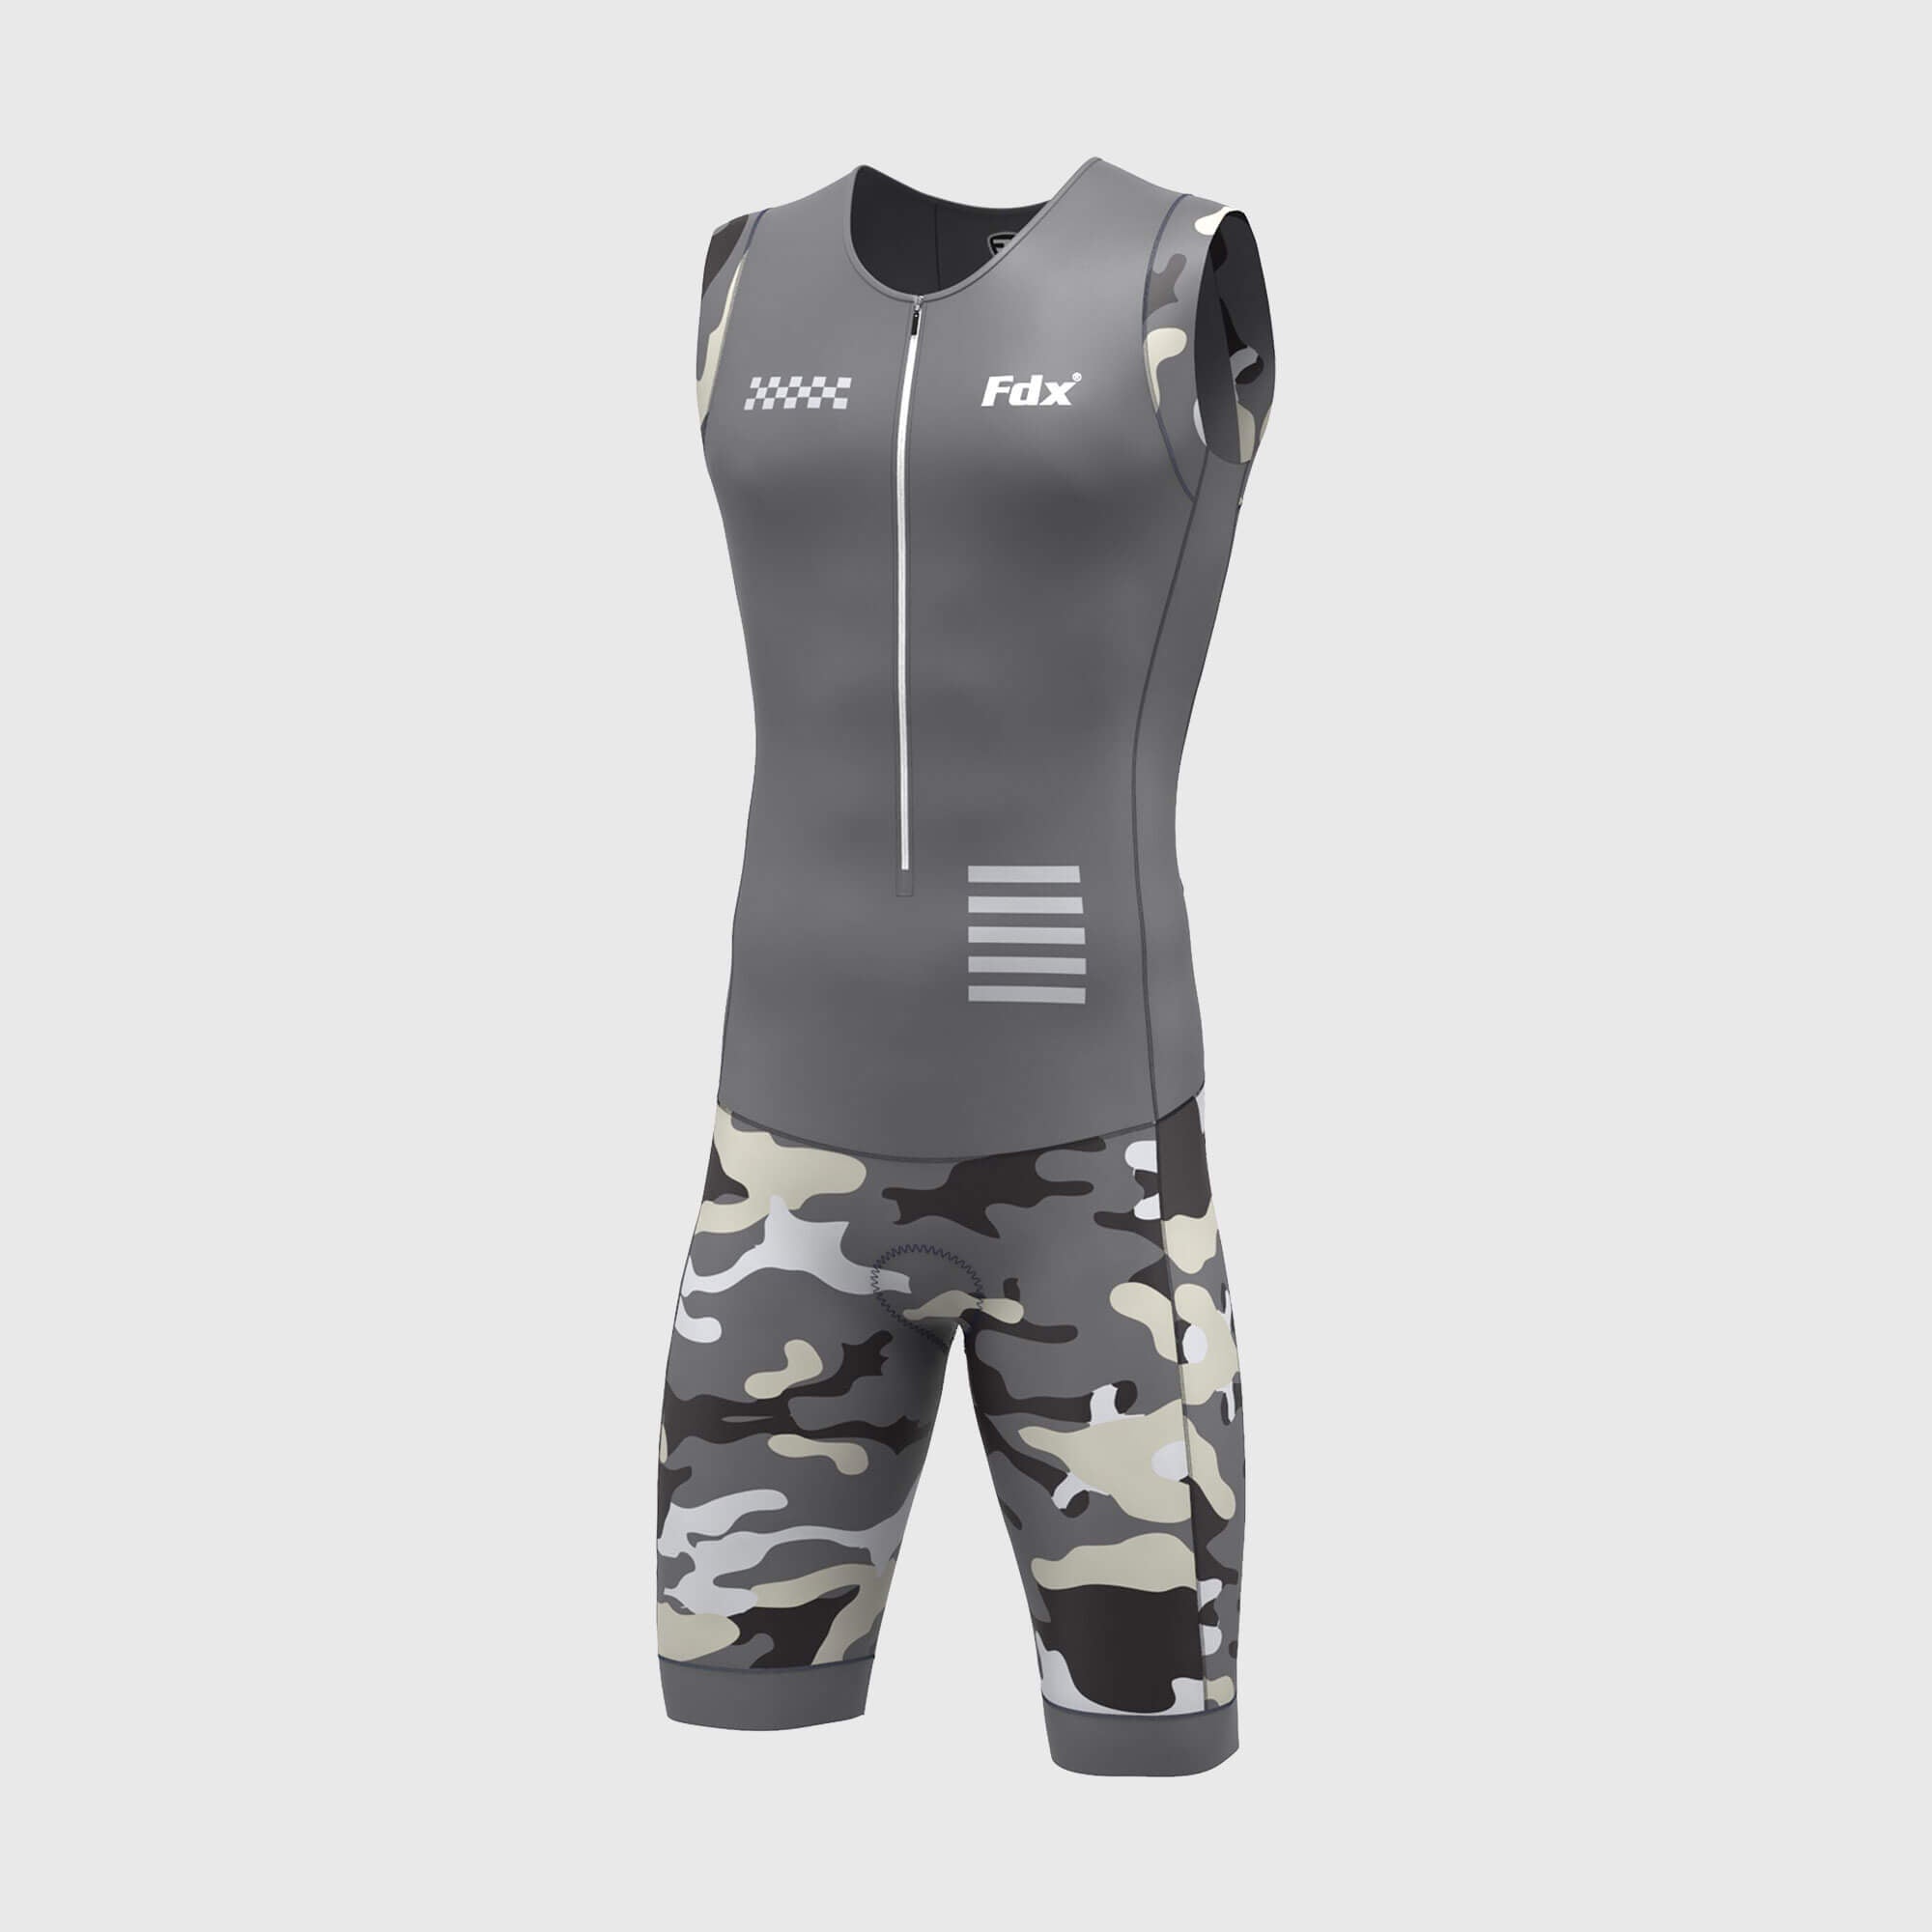 Fdx Mens Grey Sleeveless Gel Padded Triathlon / Skin Suit for Summer Cycling Wear, Running & Swimming Half Zip - Camouflage